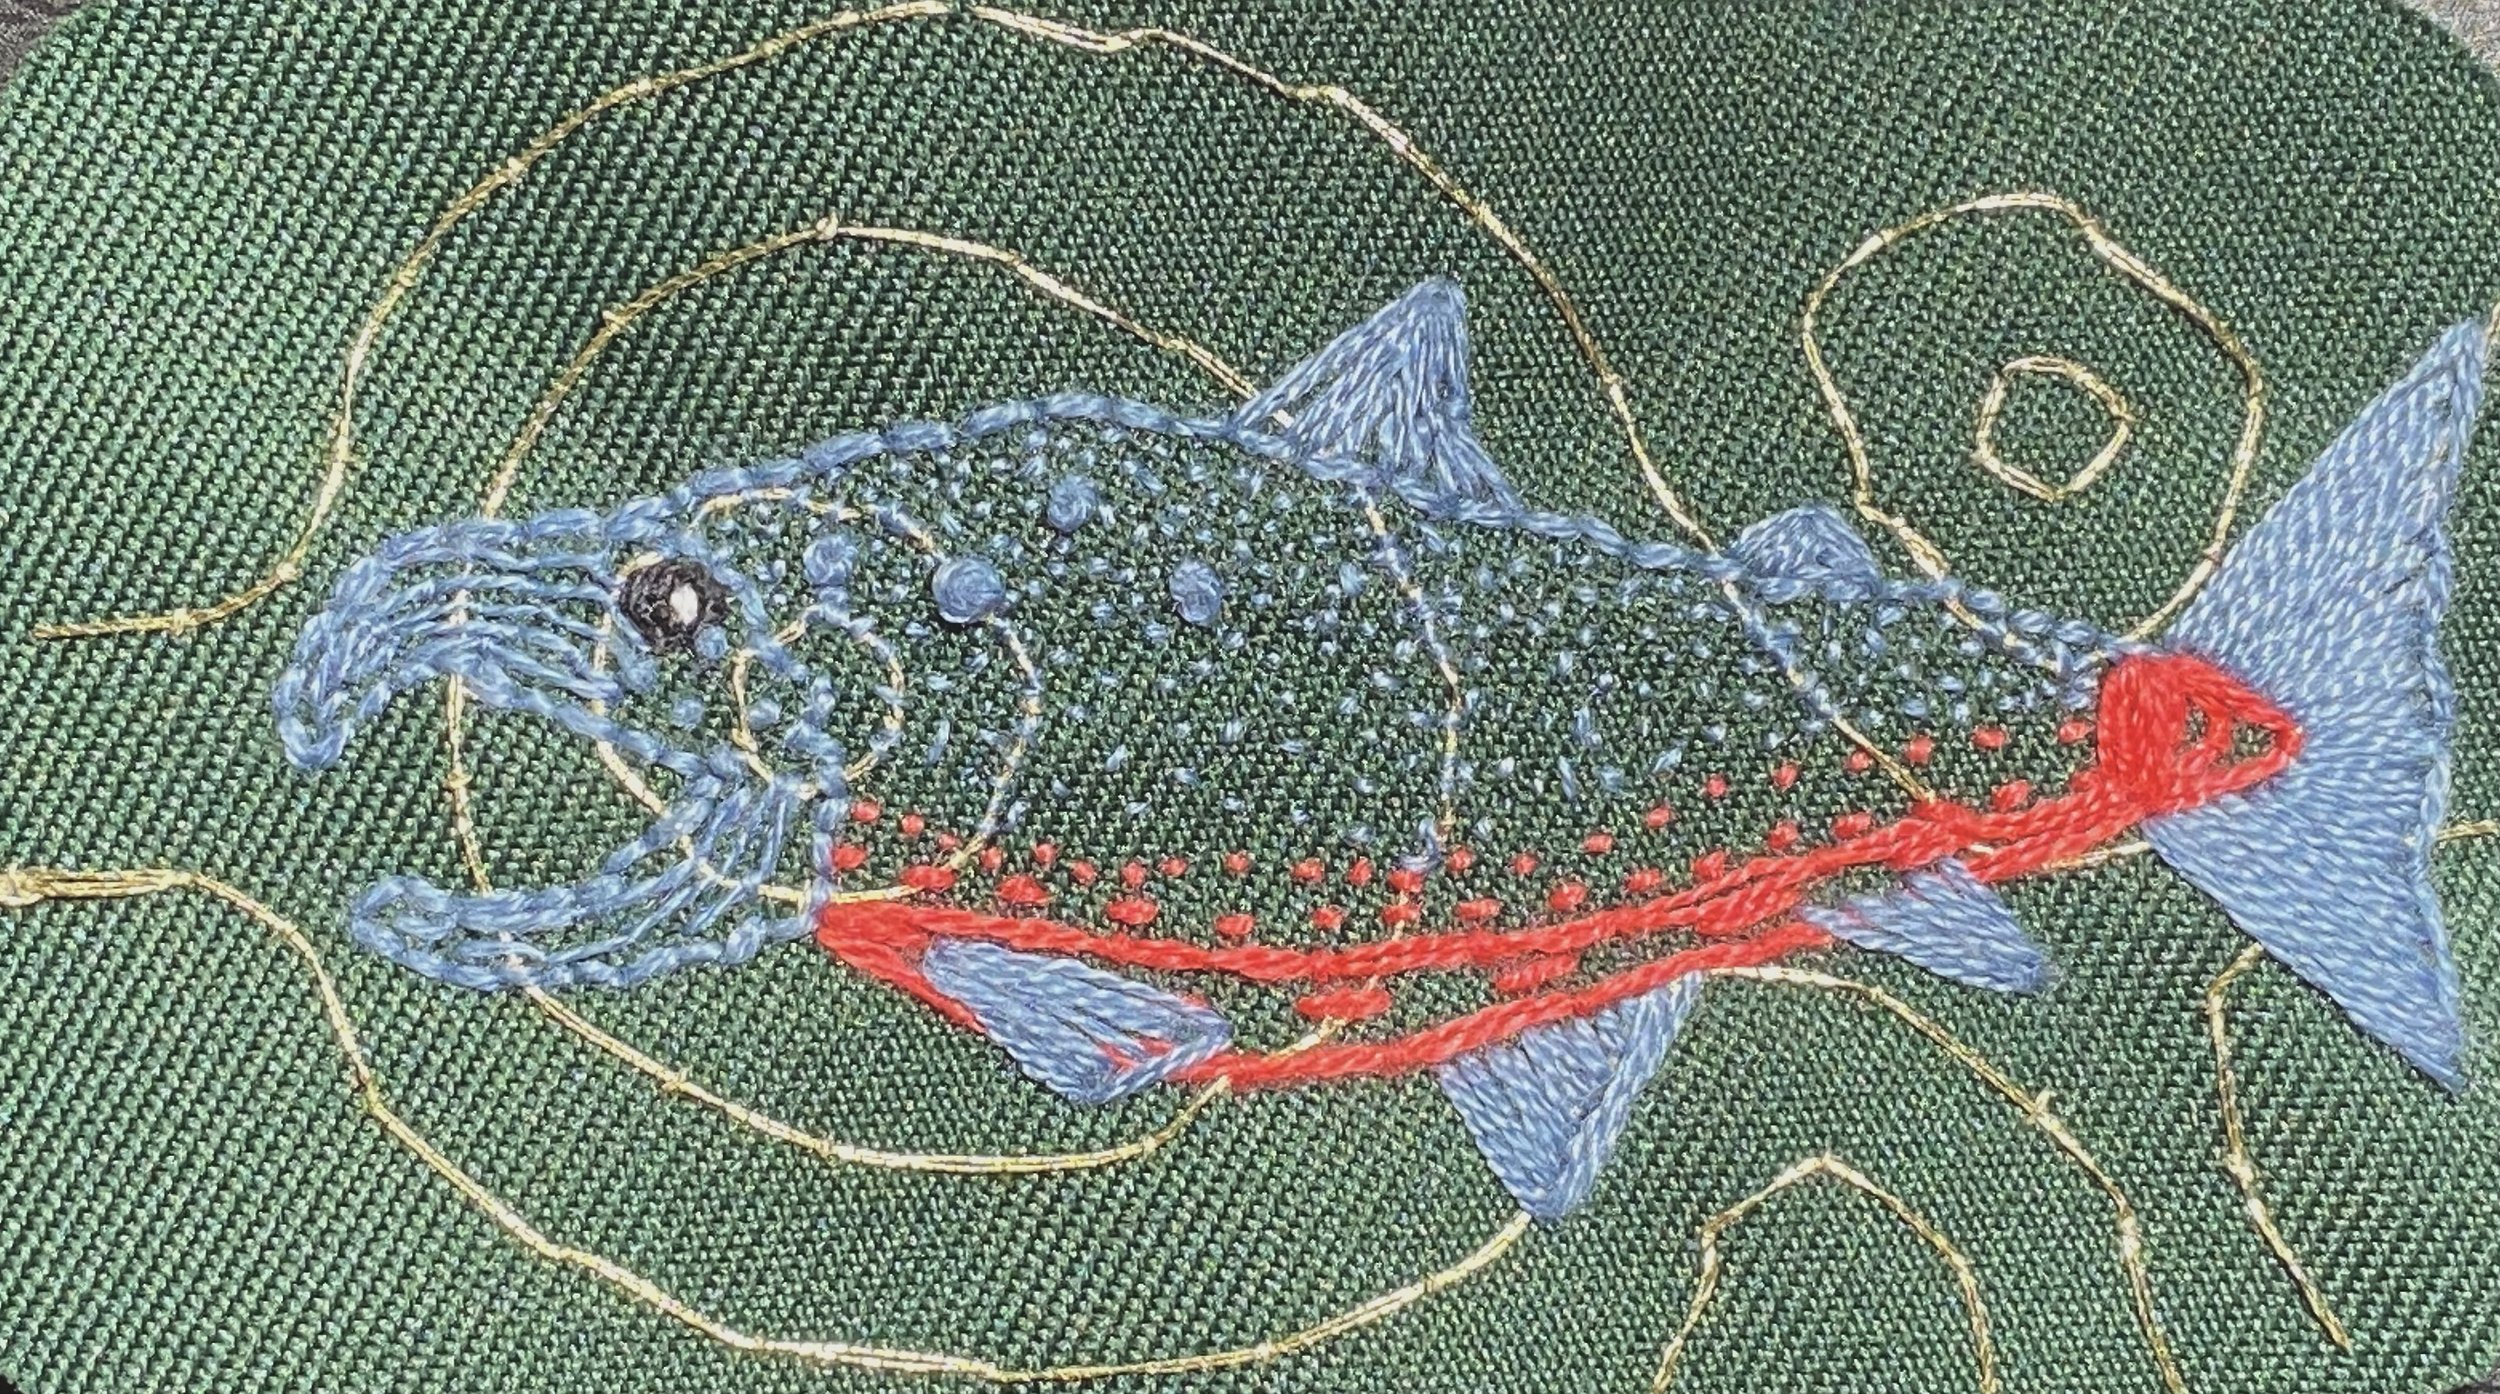 Pacific Salmon by Katherine Sammler